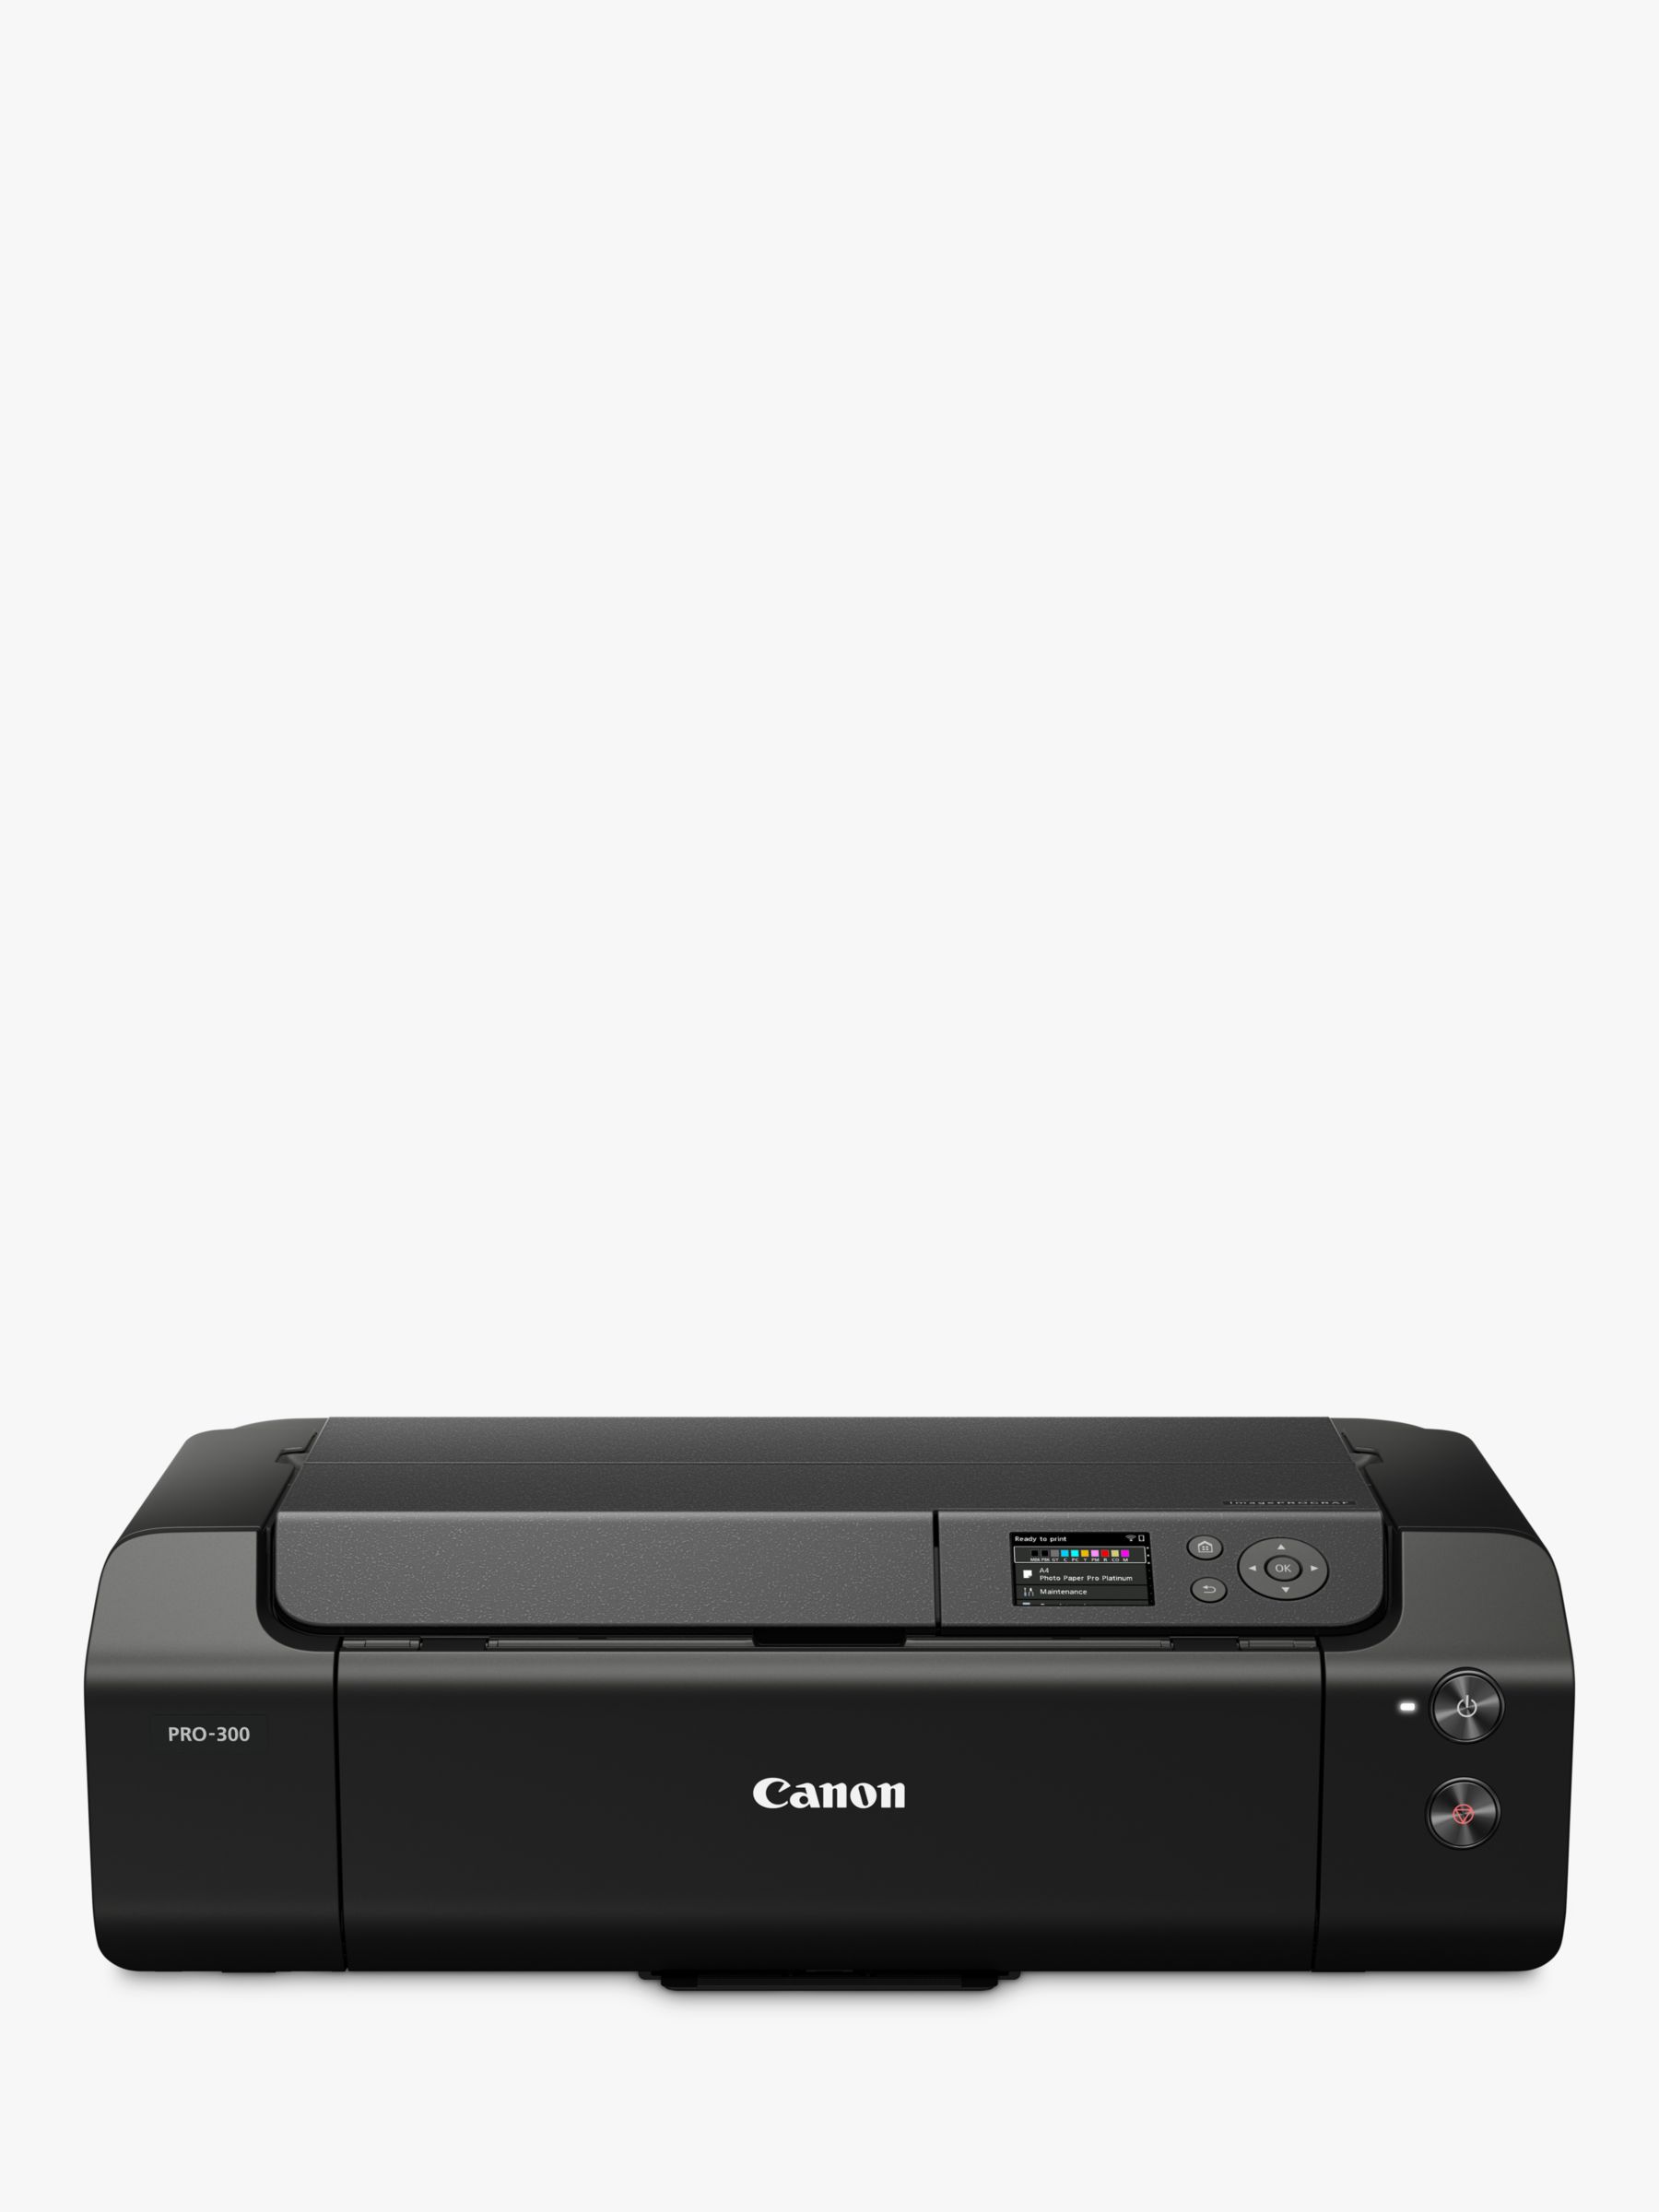 Canon imagePROGRAF PRO-300 Wireless Inkjet Printer Black